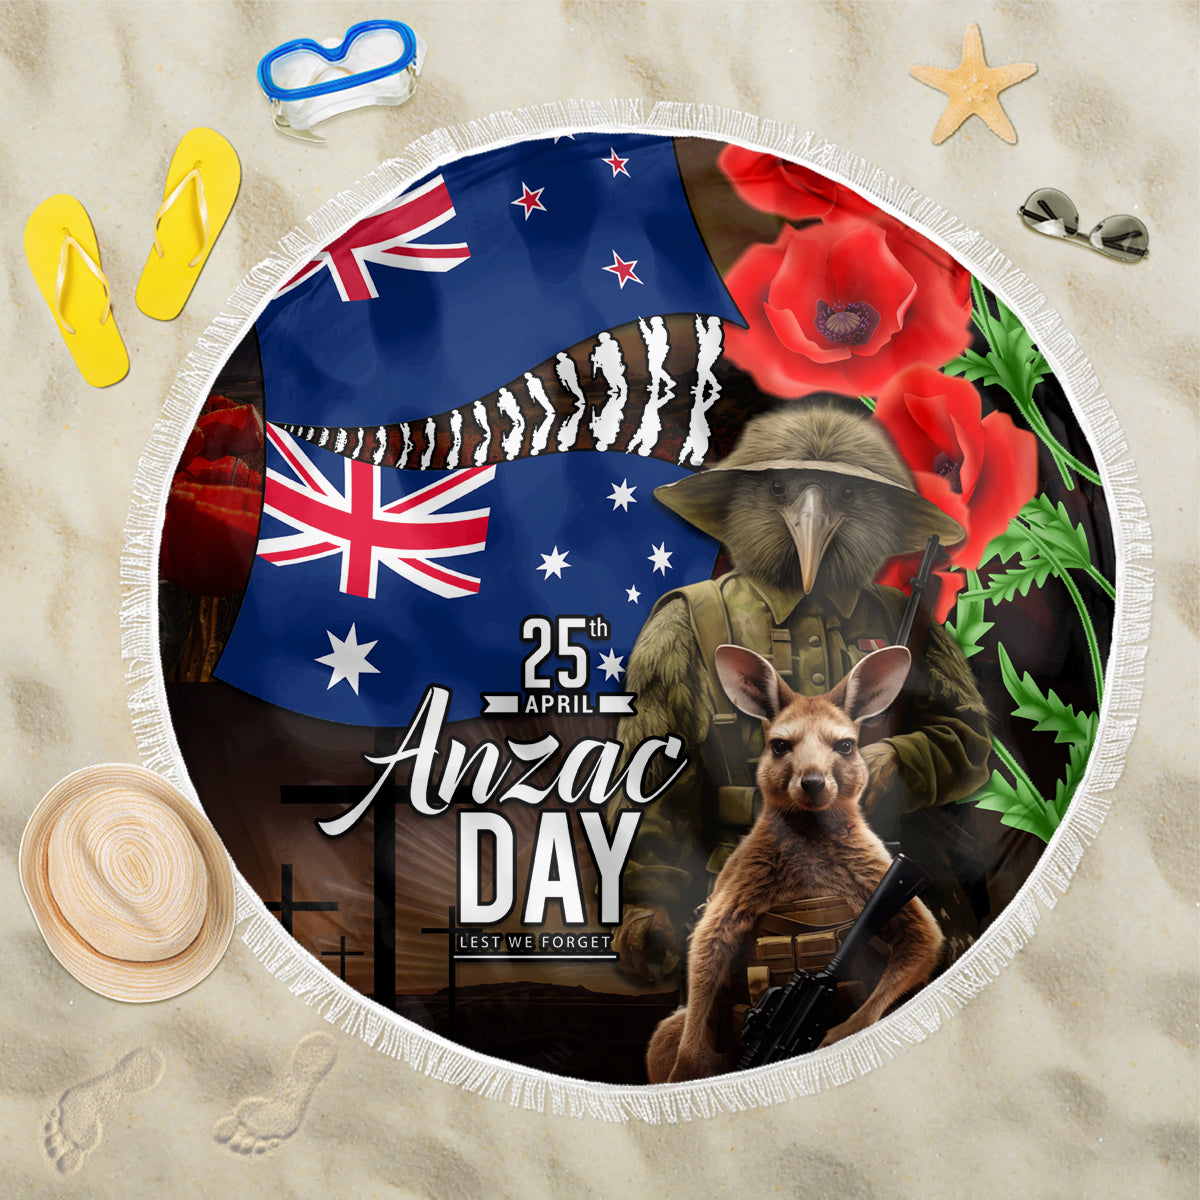 New Zealand and Australia ANZAC Day Beach Blanket National Flag mix Kiwi Bird and Kangaroo Soldier Style